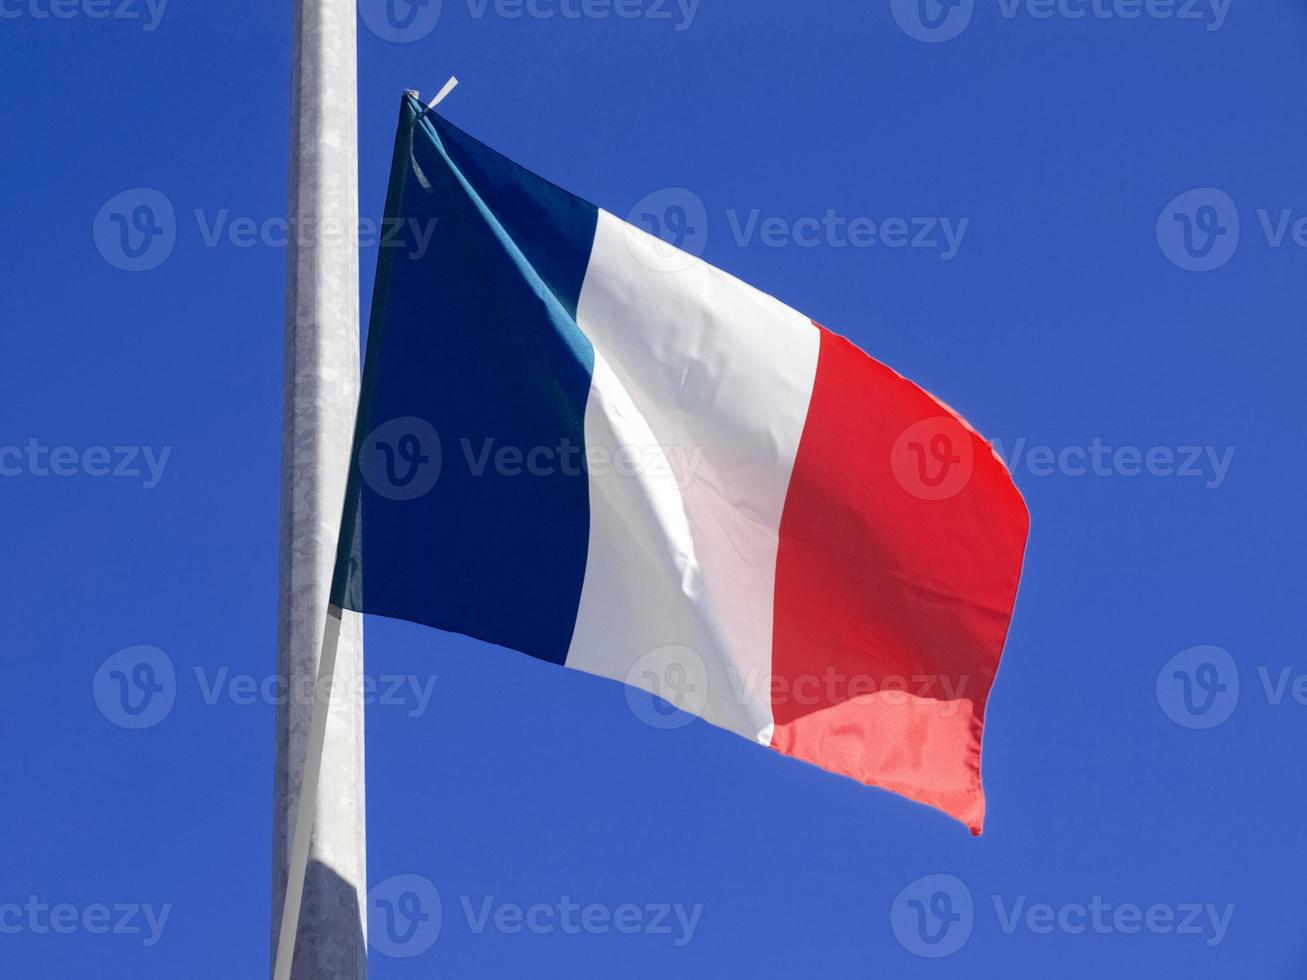 fransk flagga på en stolpe foto